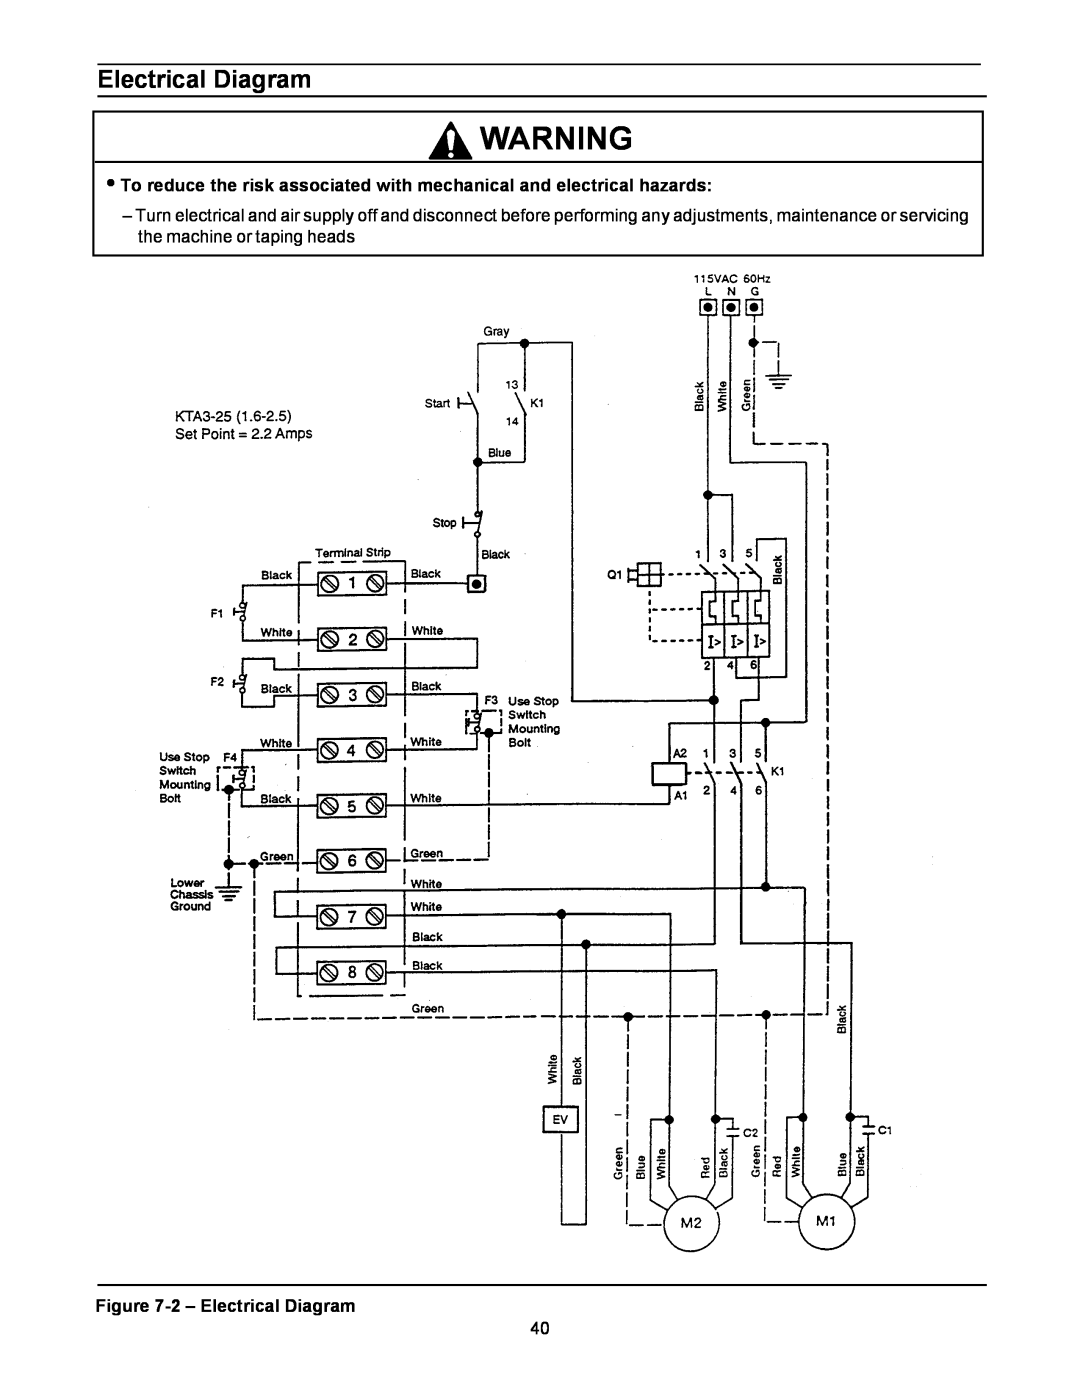 3M 800af-s manual 2– Electrical Diagram 